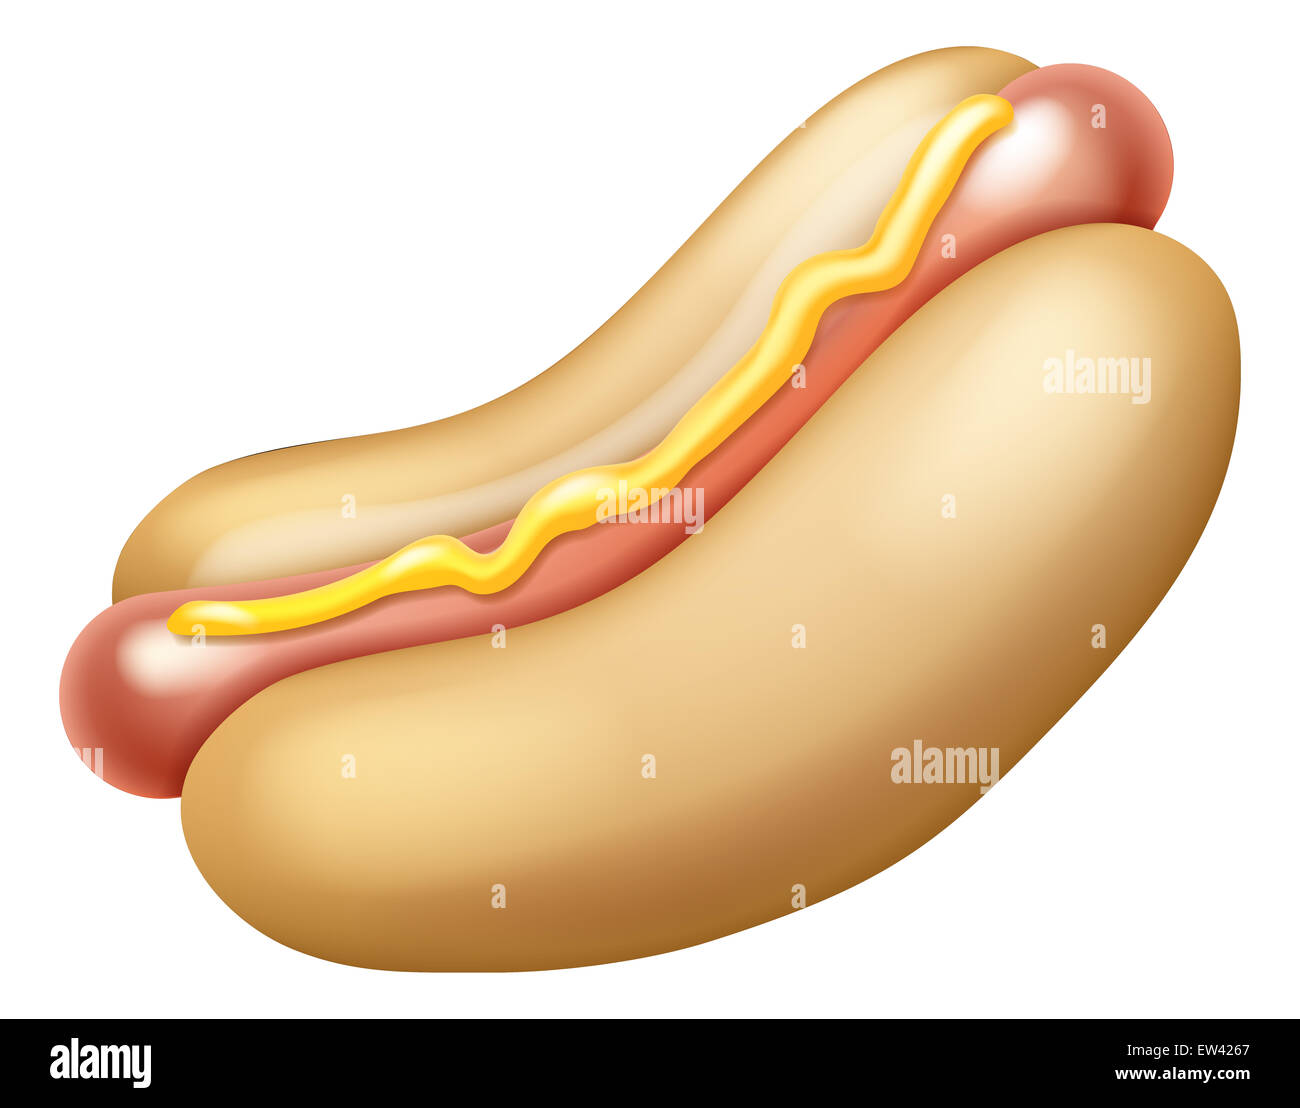 An illustration of a tasty looking cartoon hotdog Stock Photo